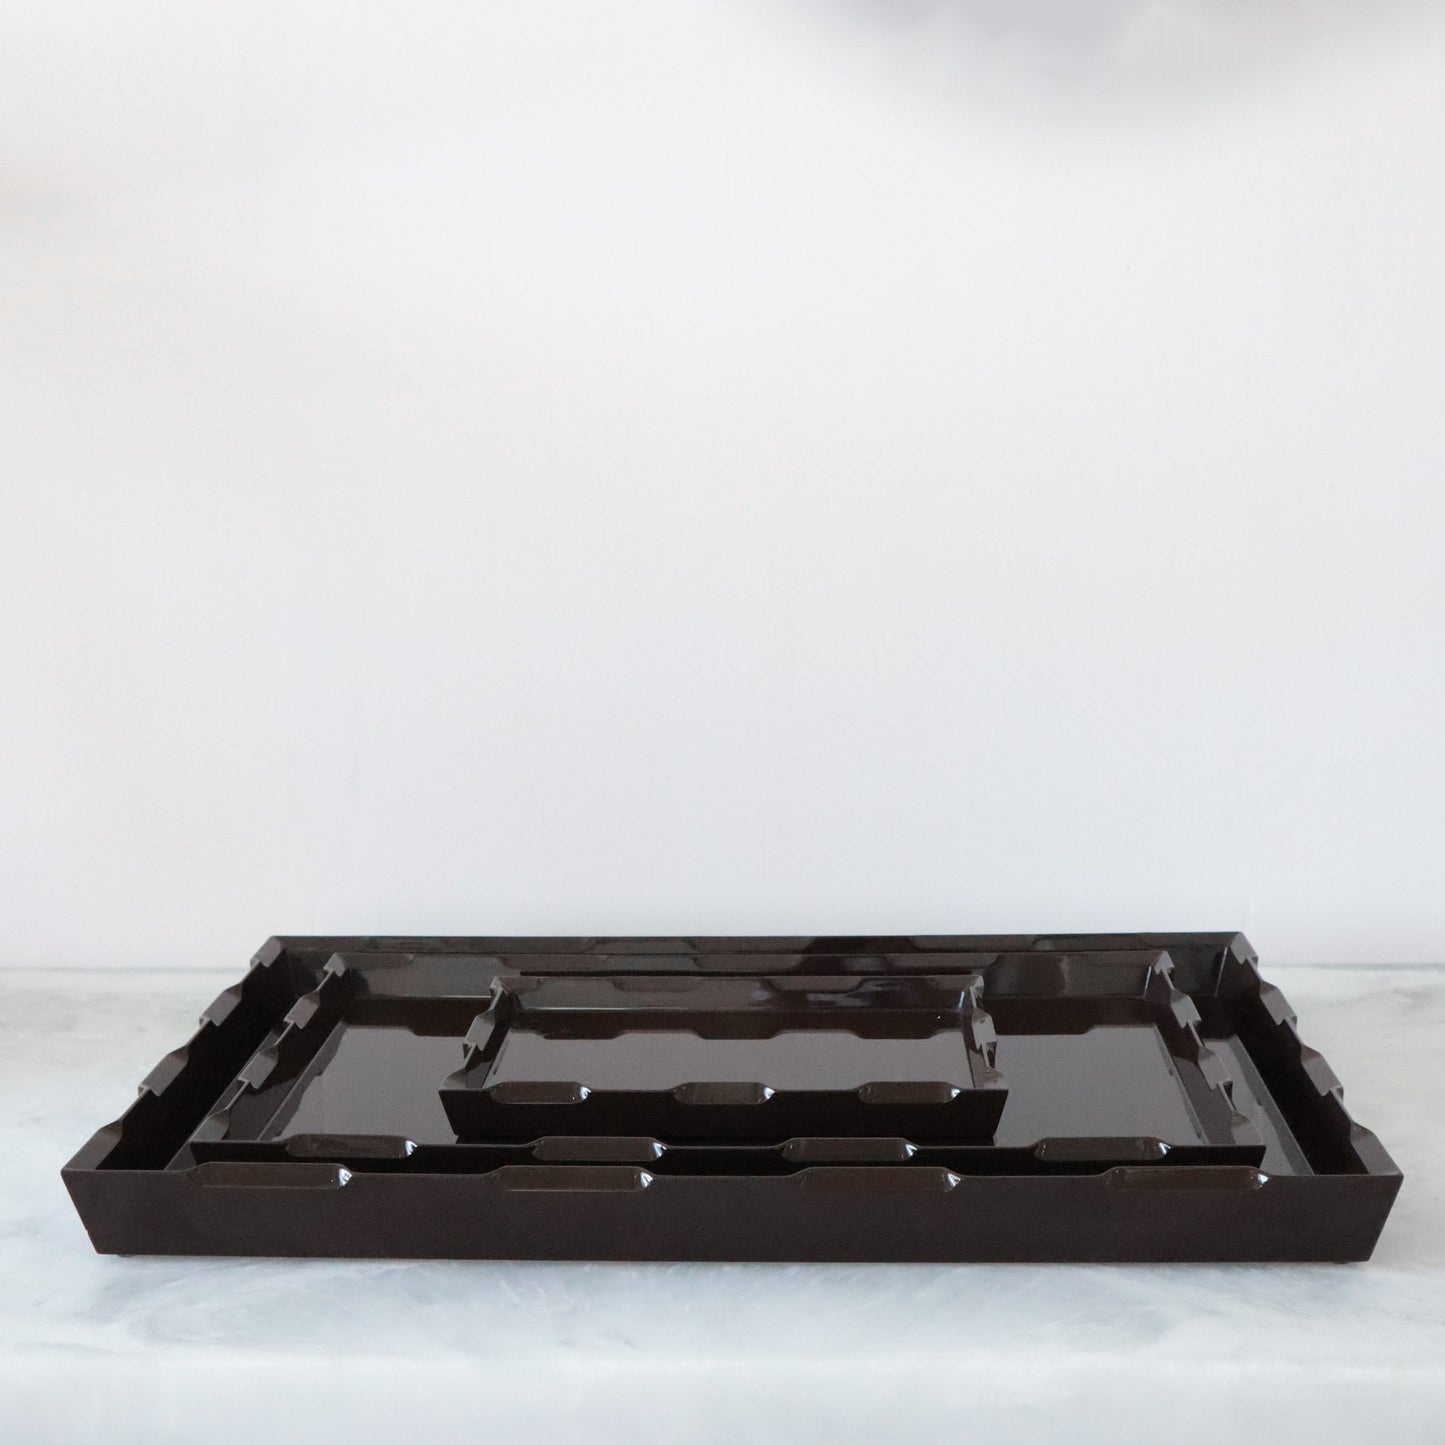 Small Denston Tray - Chocolate Brown